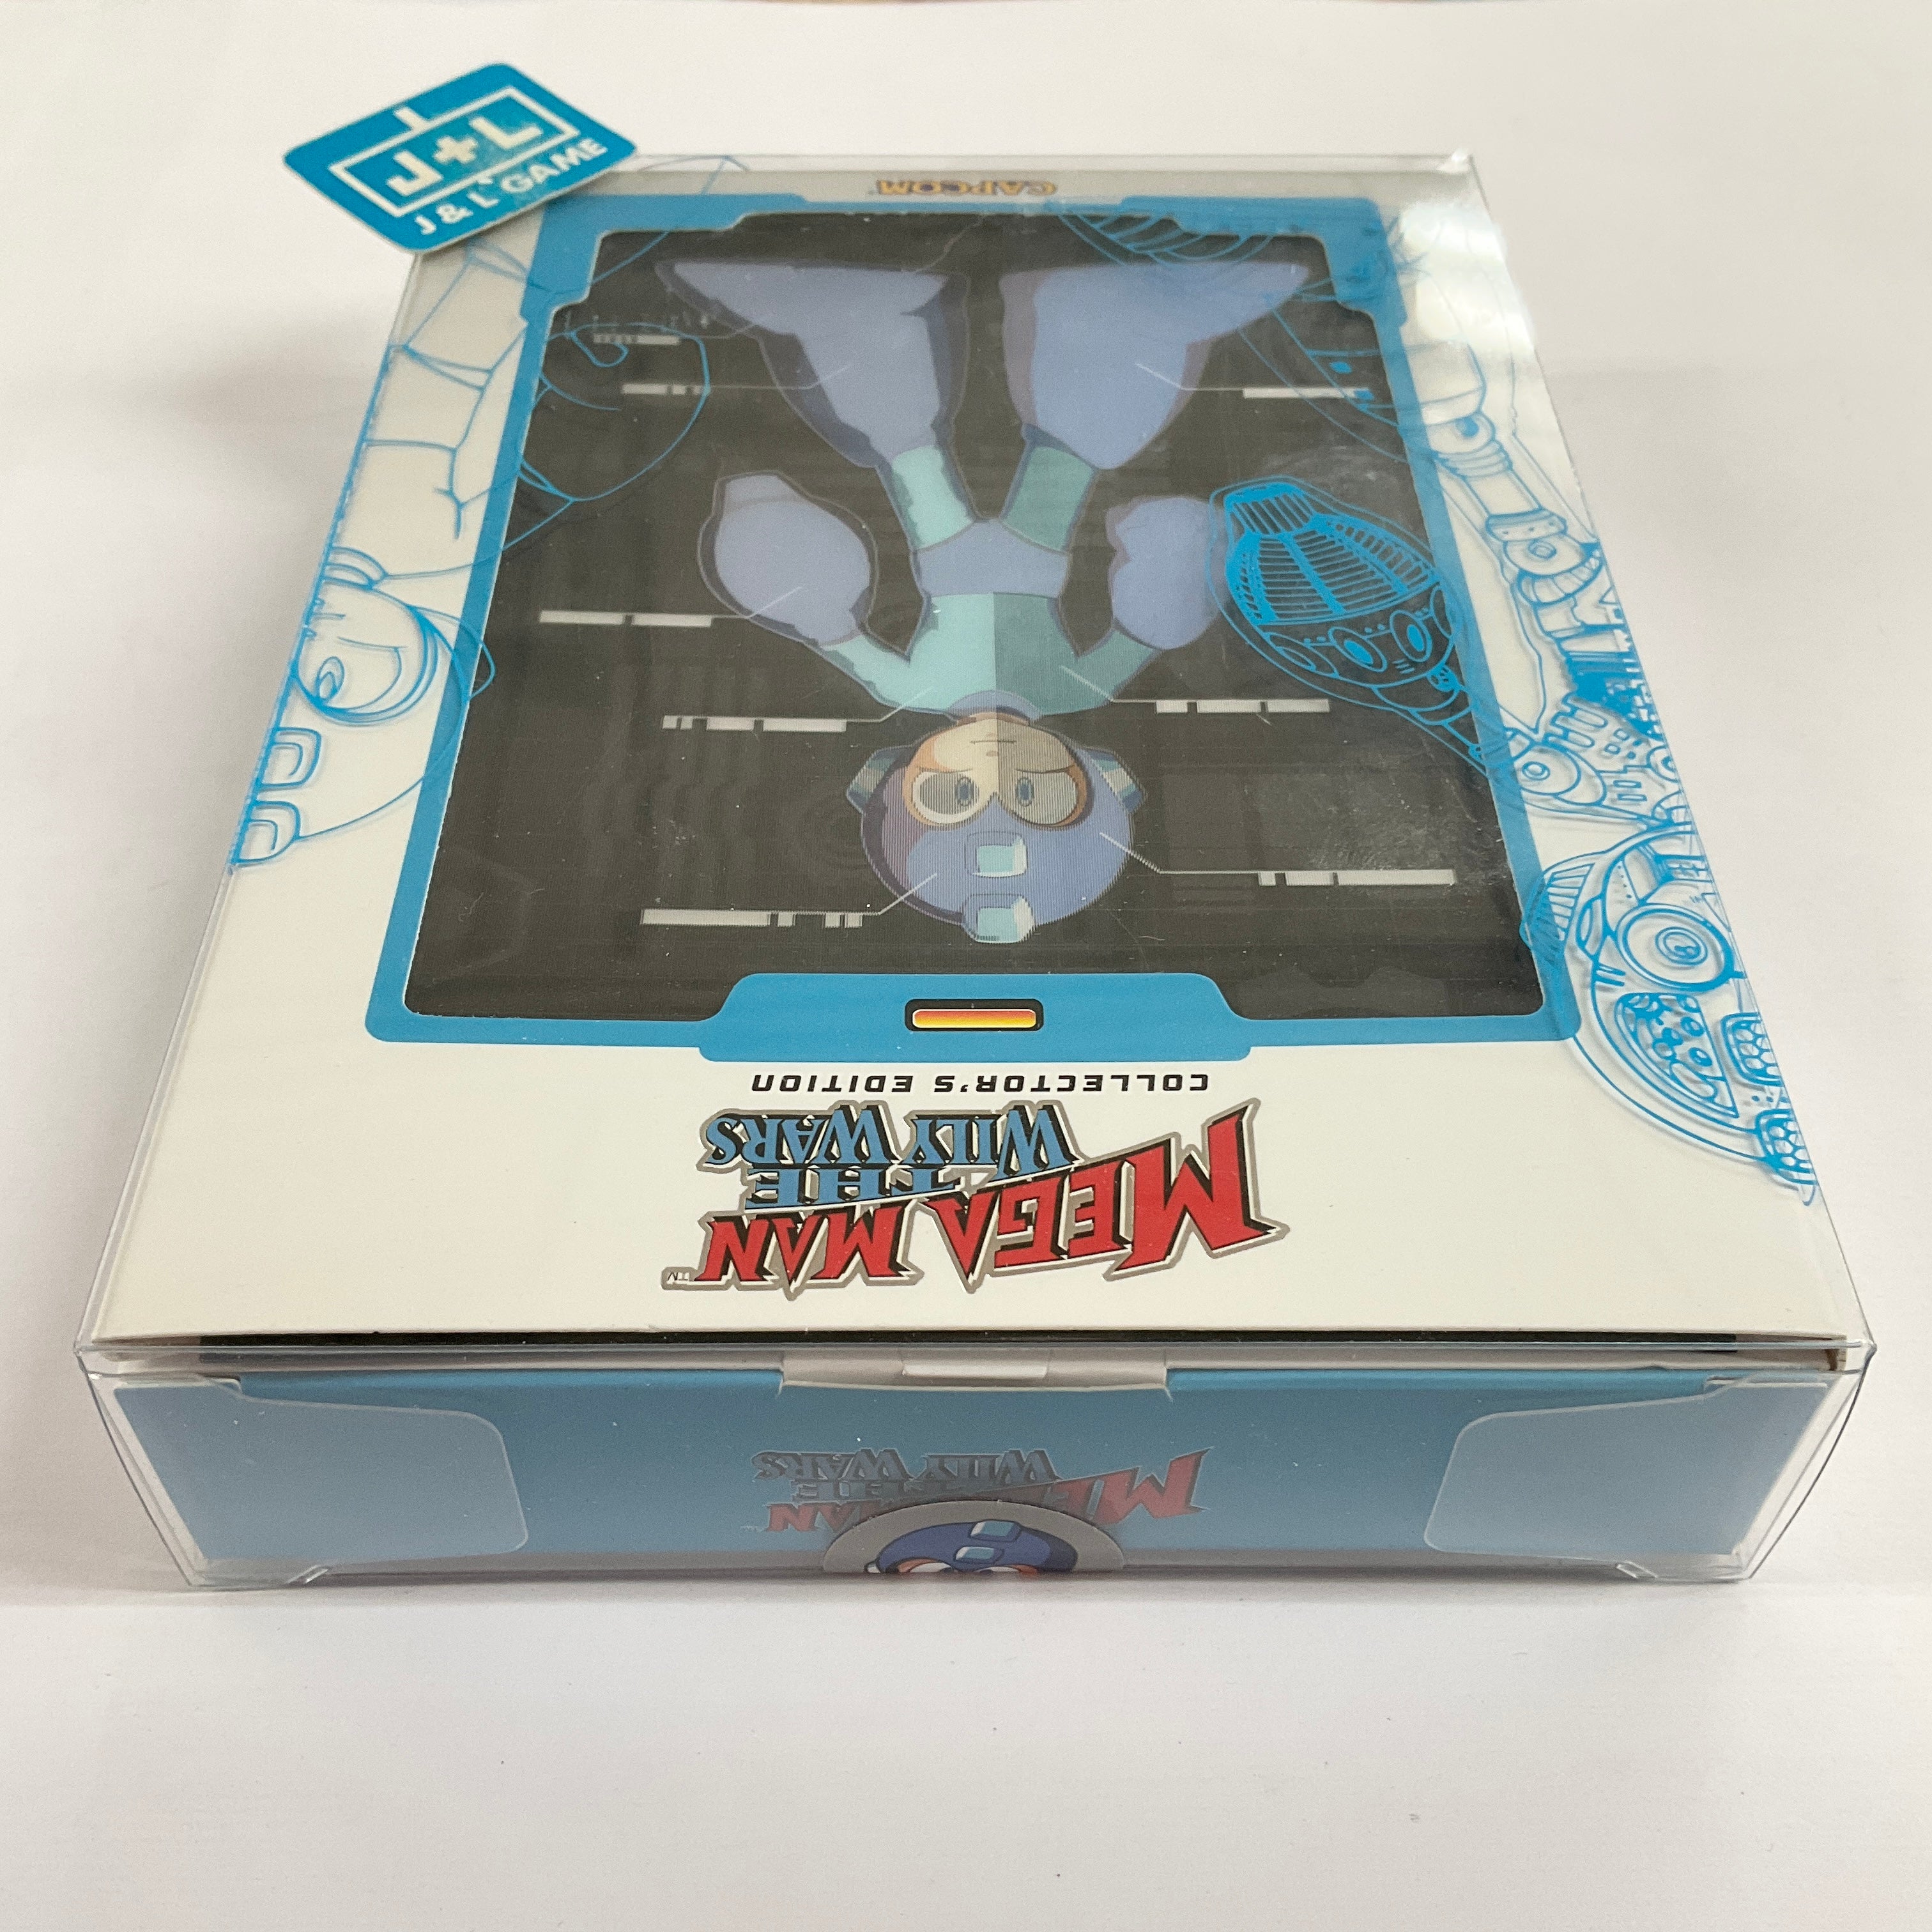 Mega Man: The Wily Wars (Collector's Edition) - (SG) Sega Genesis Video Games Capcom   